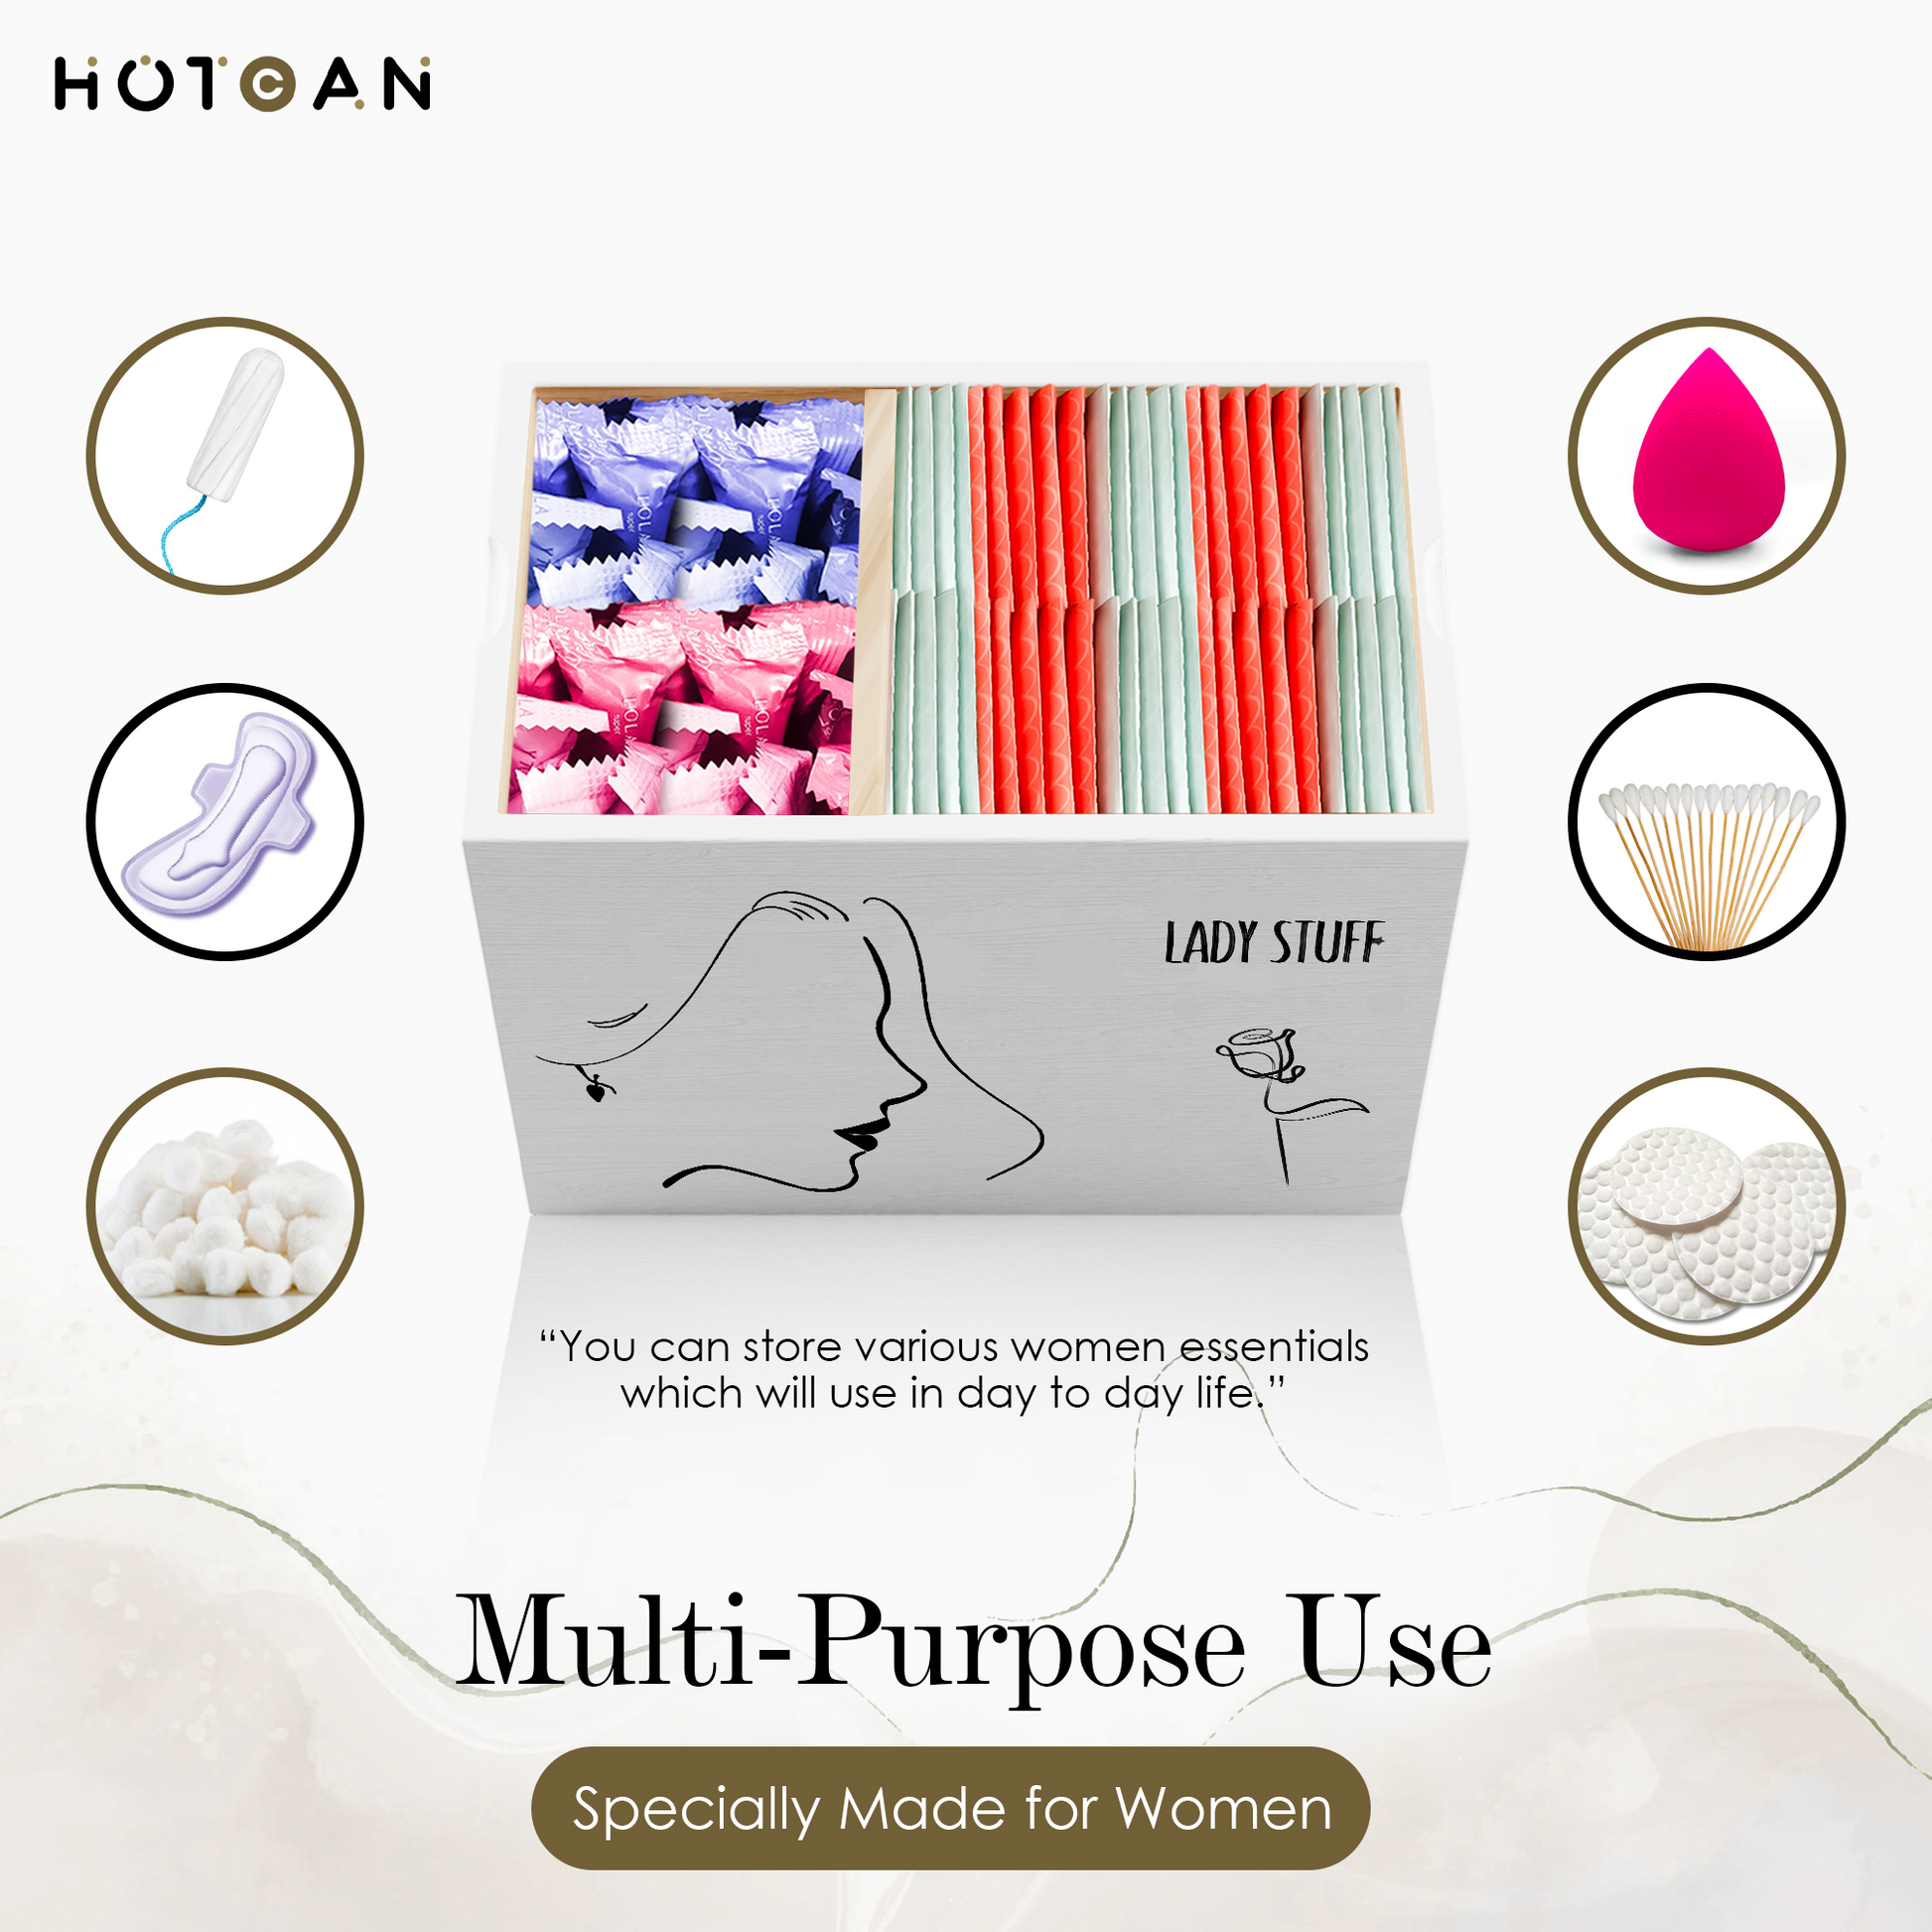 HOTCAN Wooden Tampon Holder for Bathroom - Feminine Product Organizer